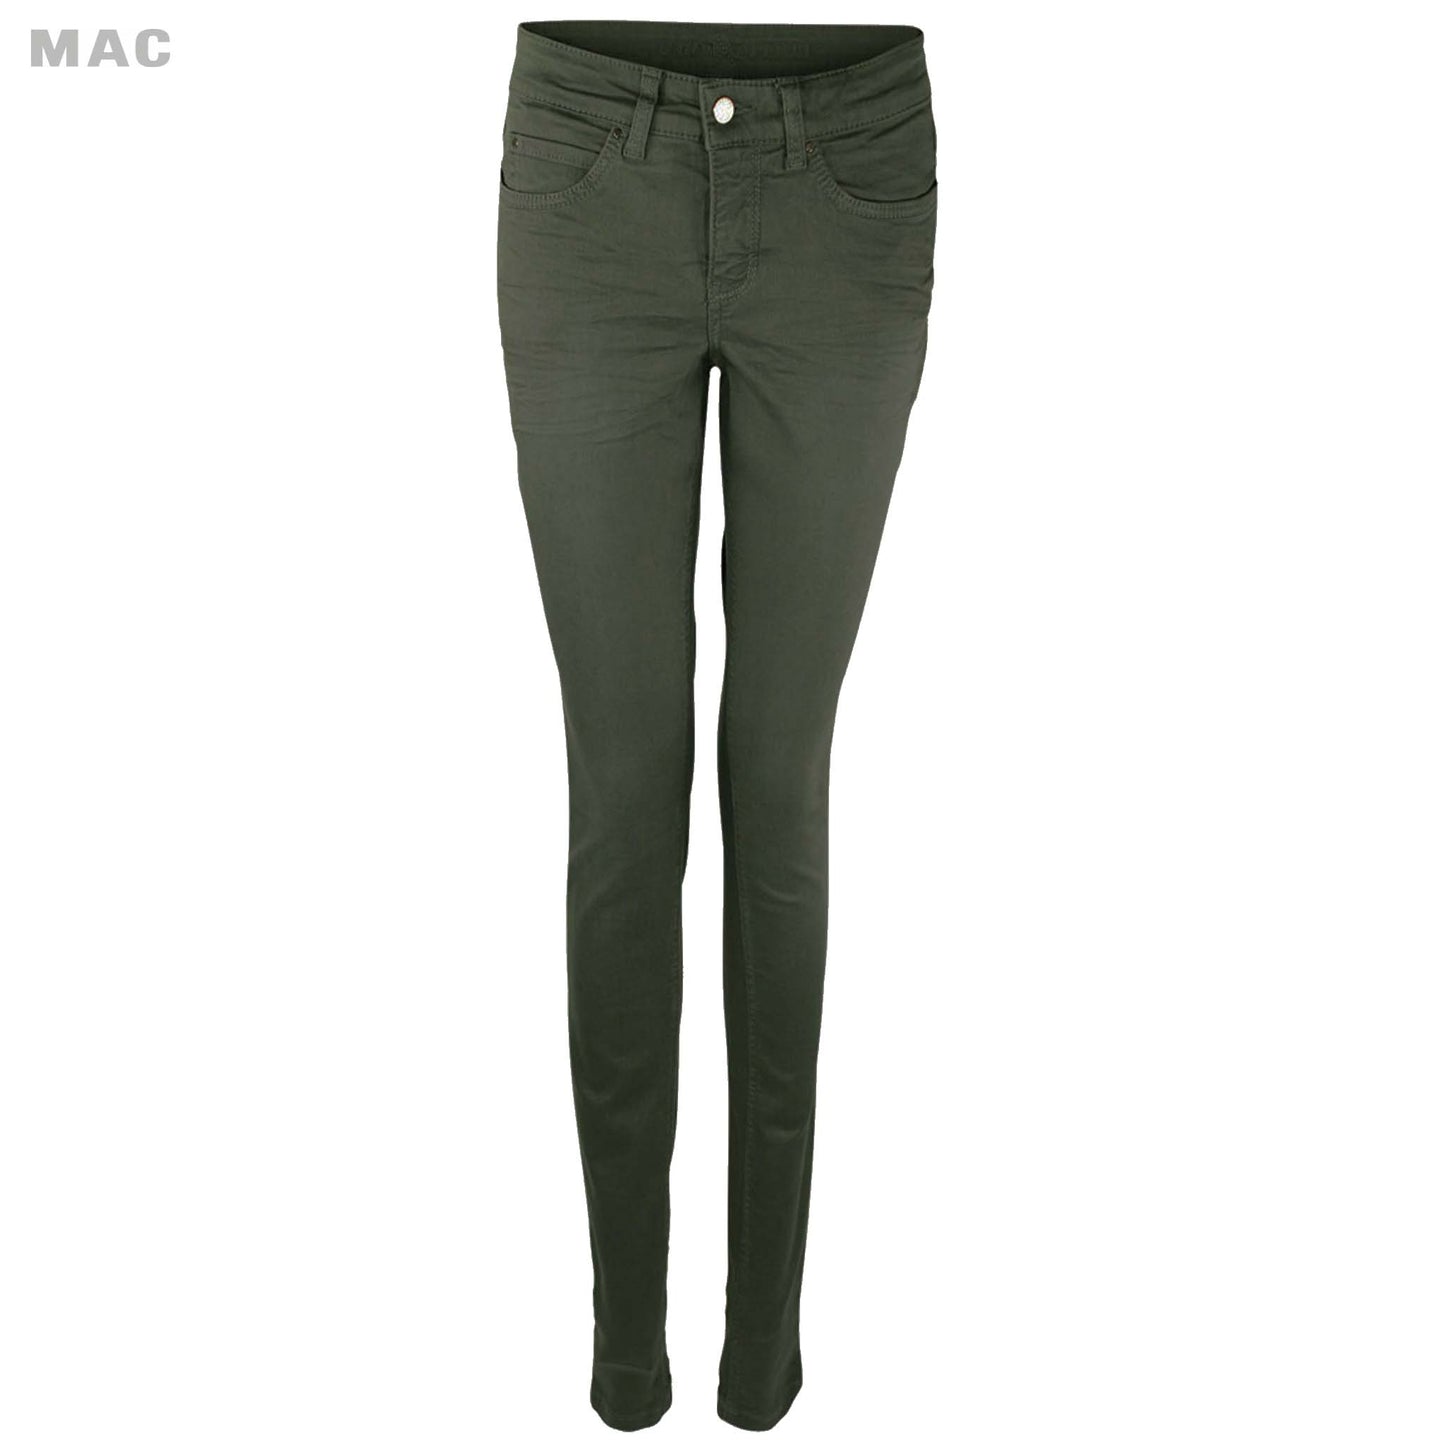 clothing tall women copy of mac jeans dream skinny dark rinse